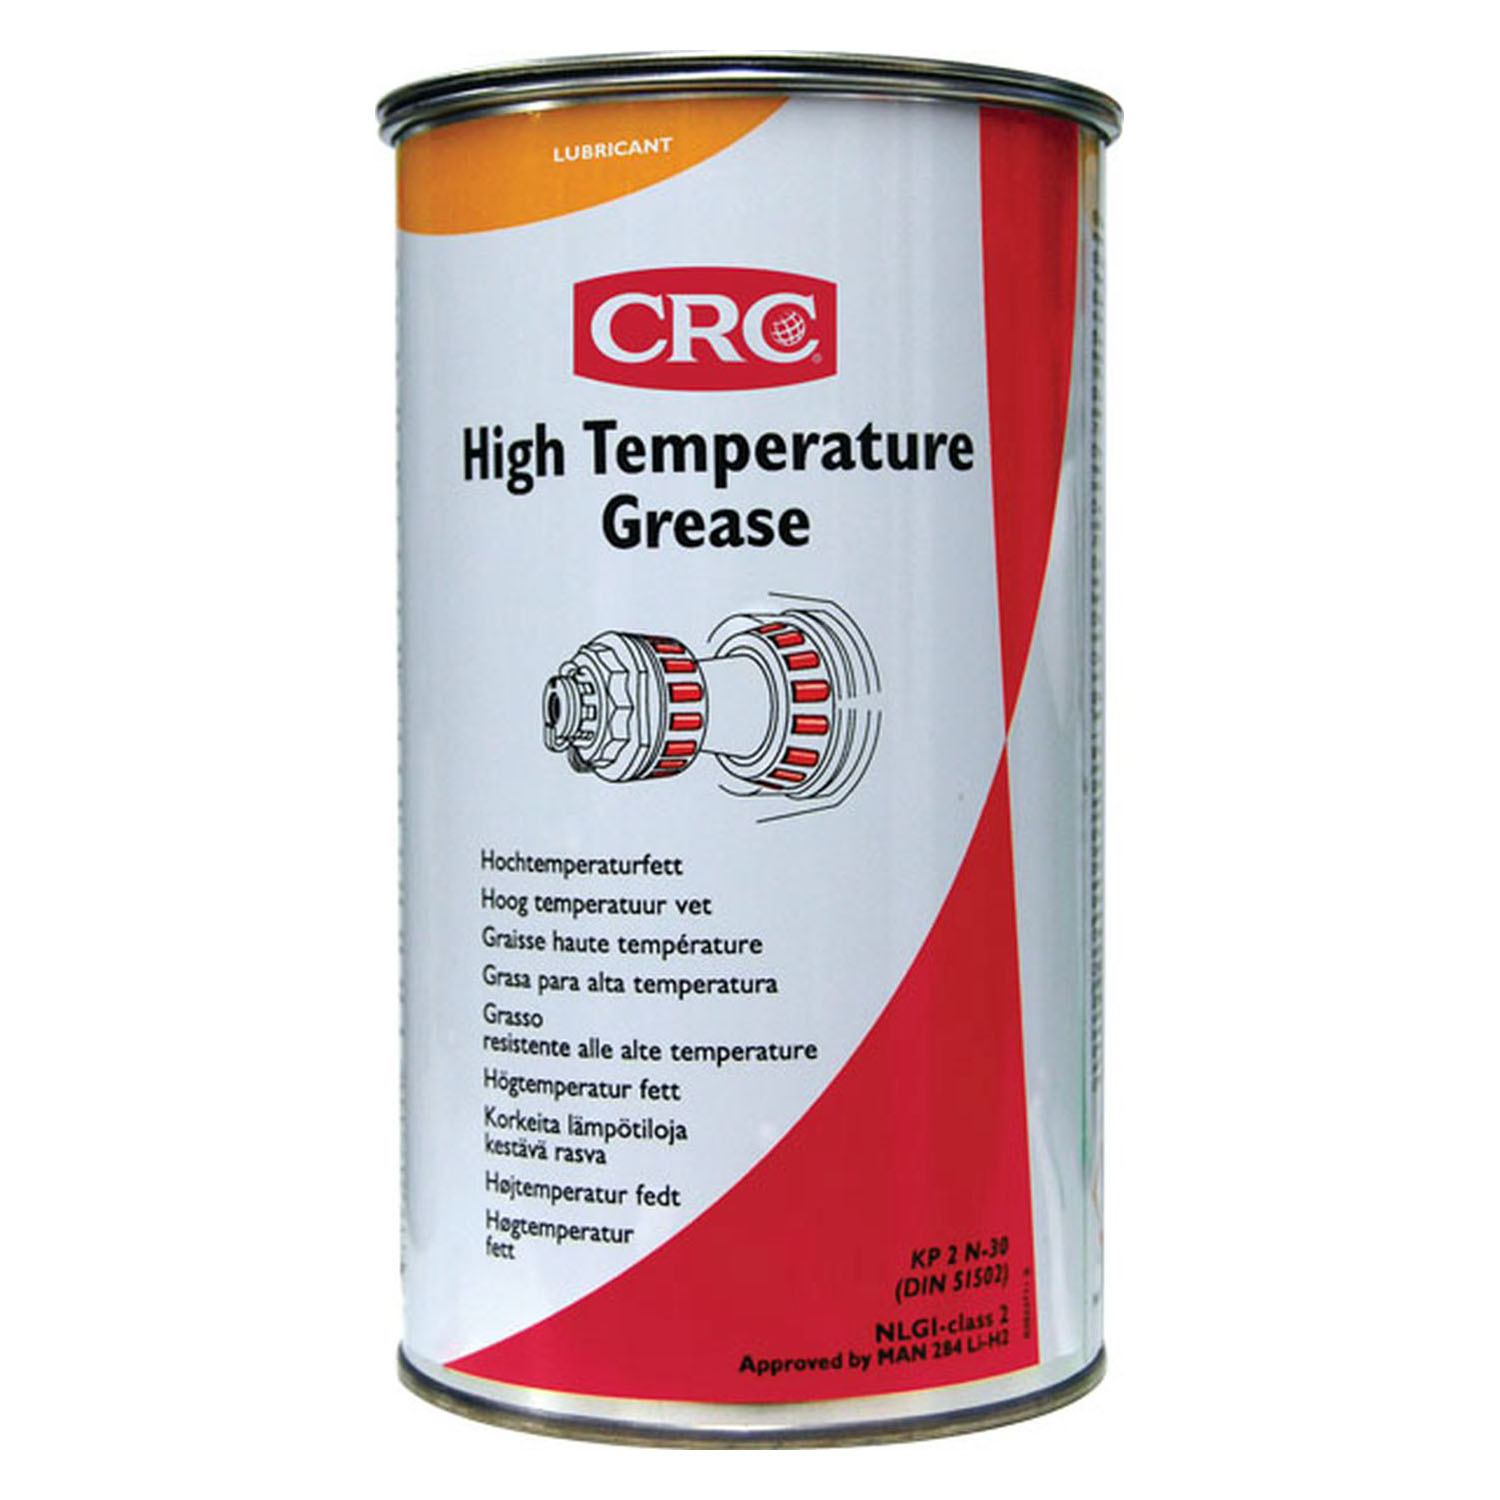 CRC High Temperature Grease Hochtemperaturfett, 1 kg - Dose